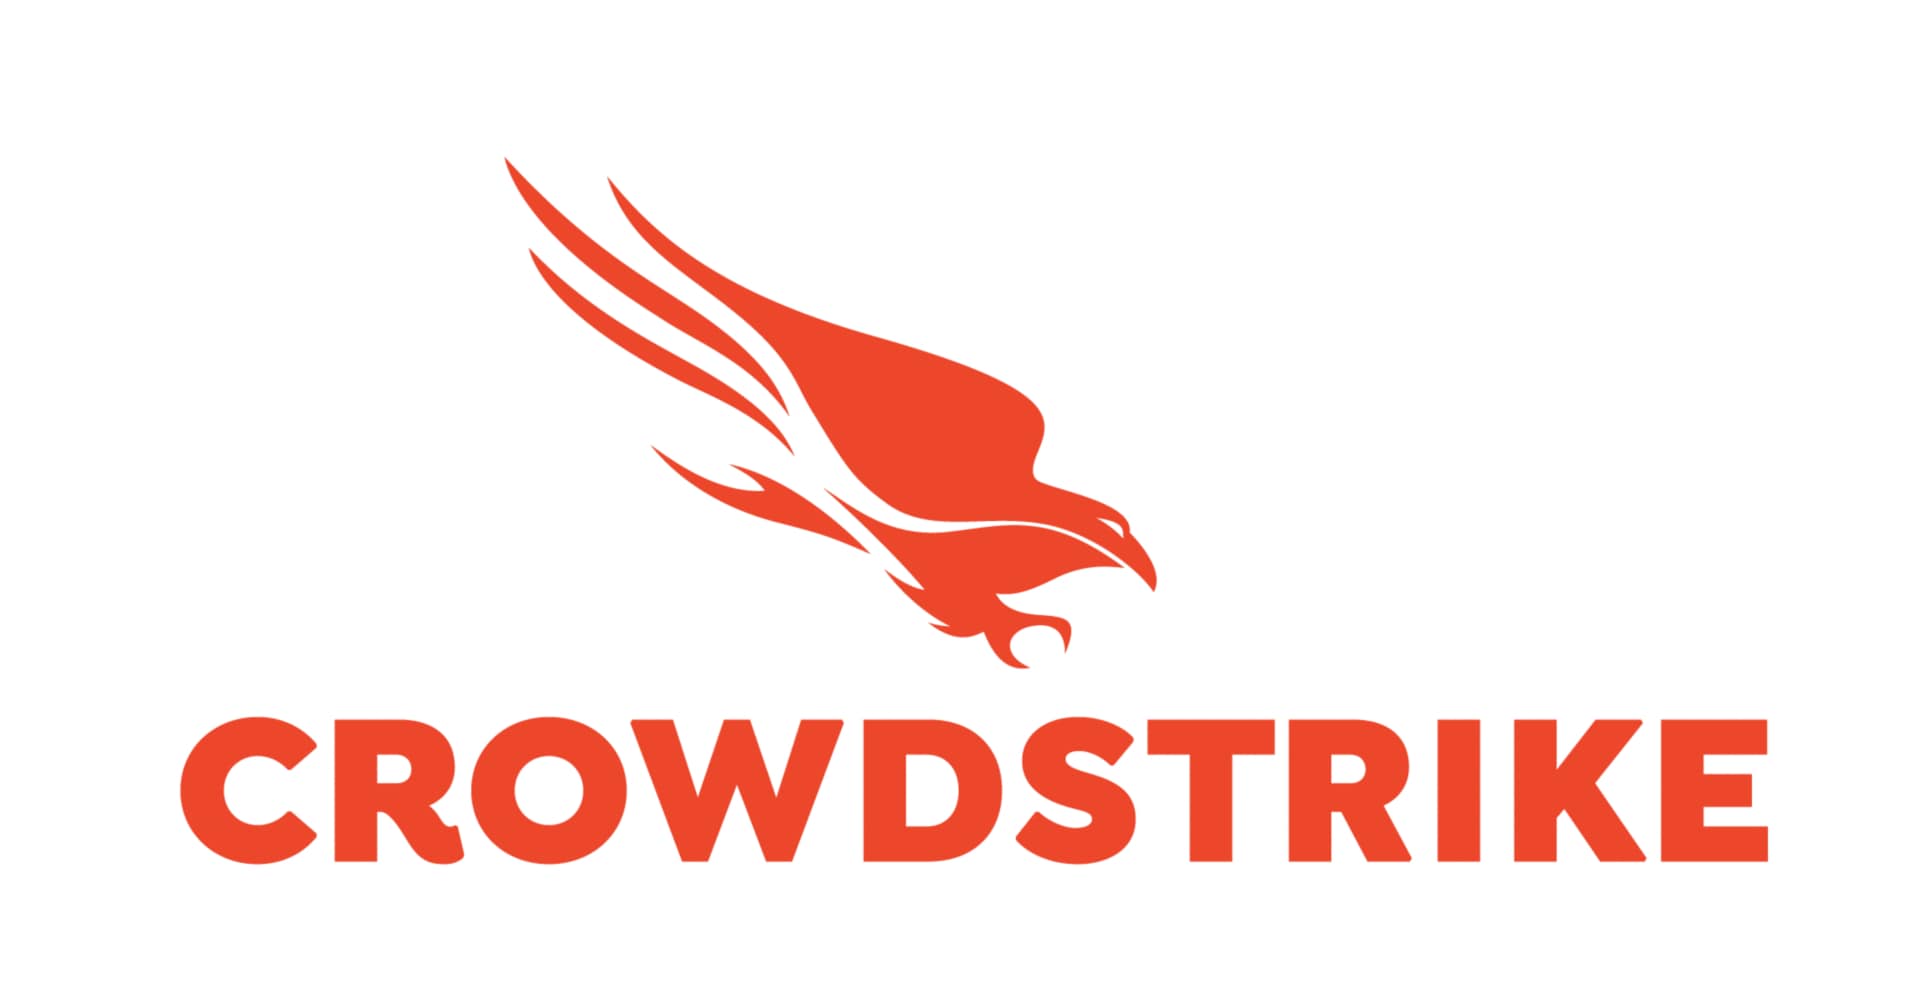 CrowdStrike 31-Month Falcon Firewall Management Bundle Promo Software